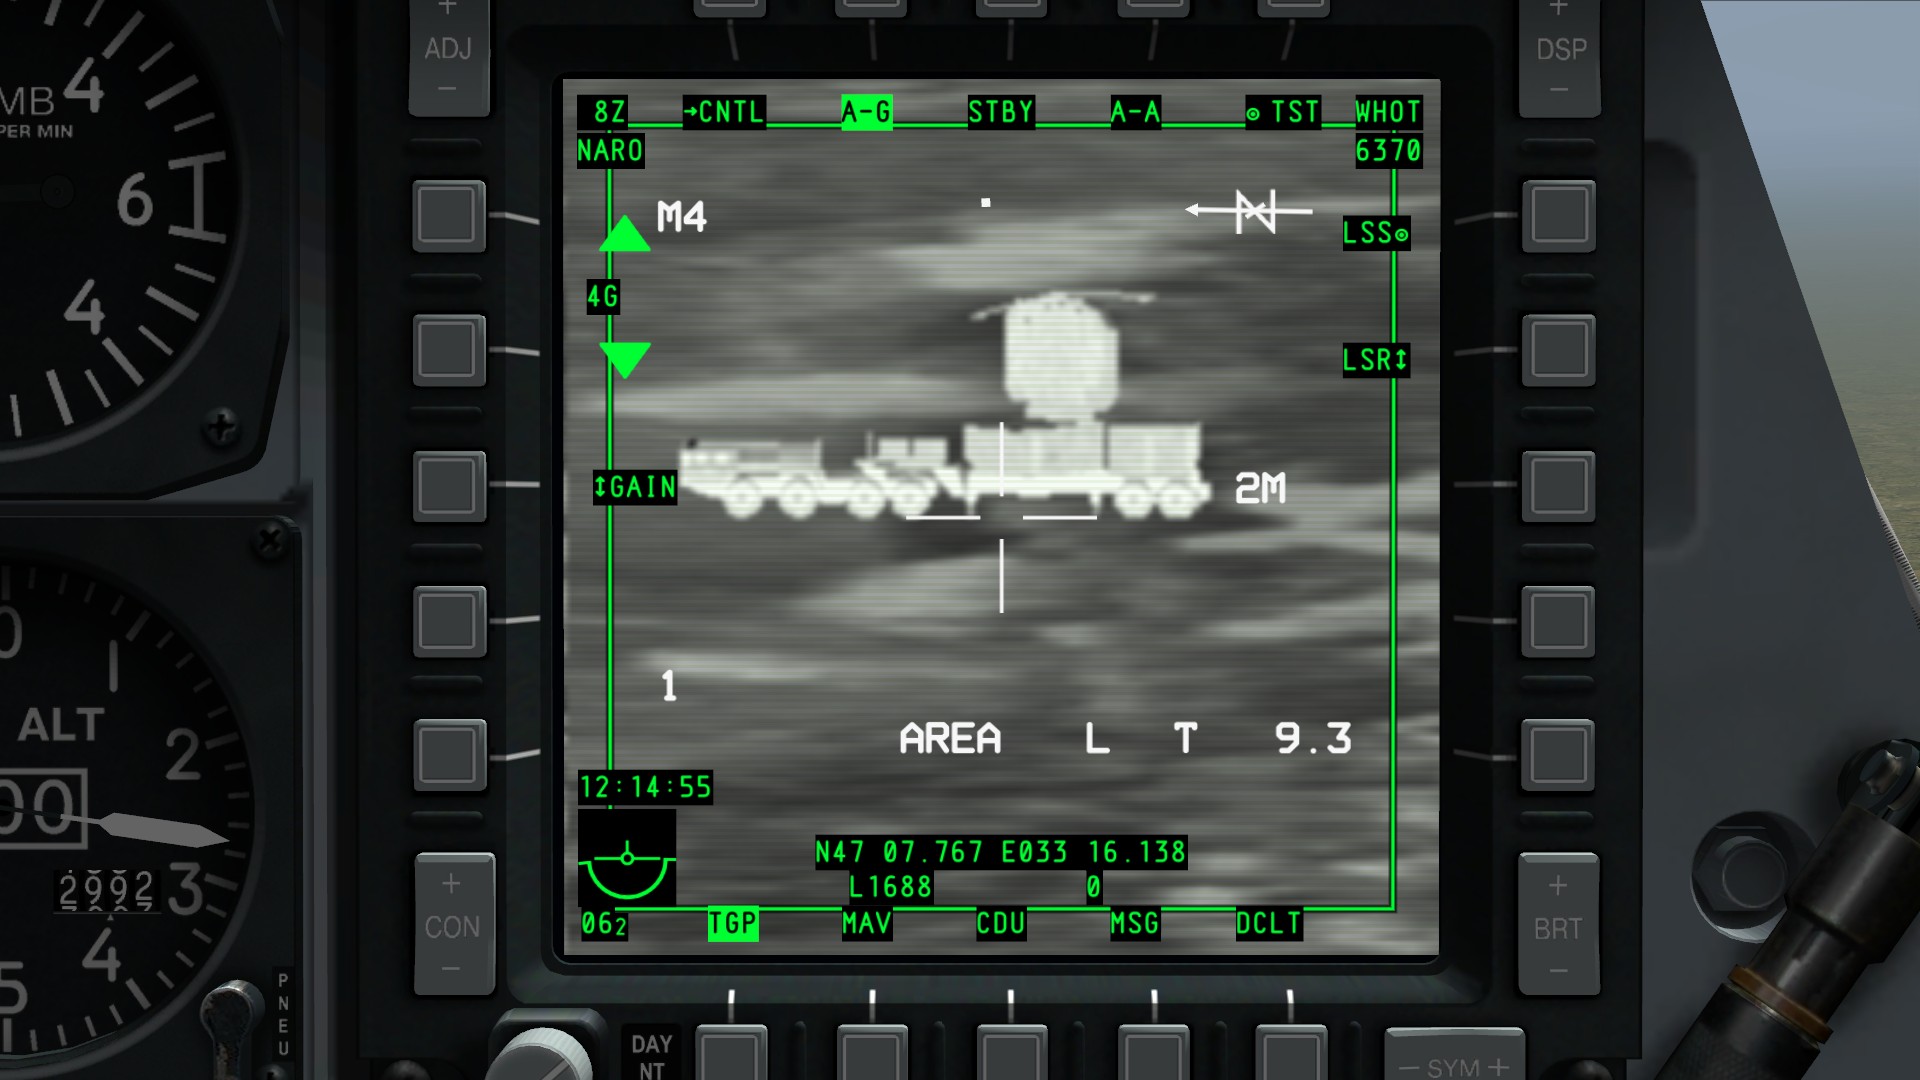 SA10 Search Radar WHOT.jpg